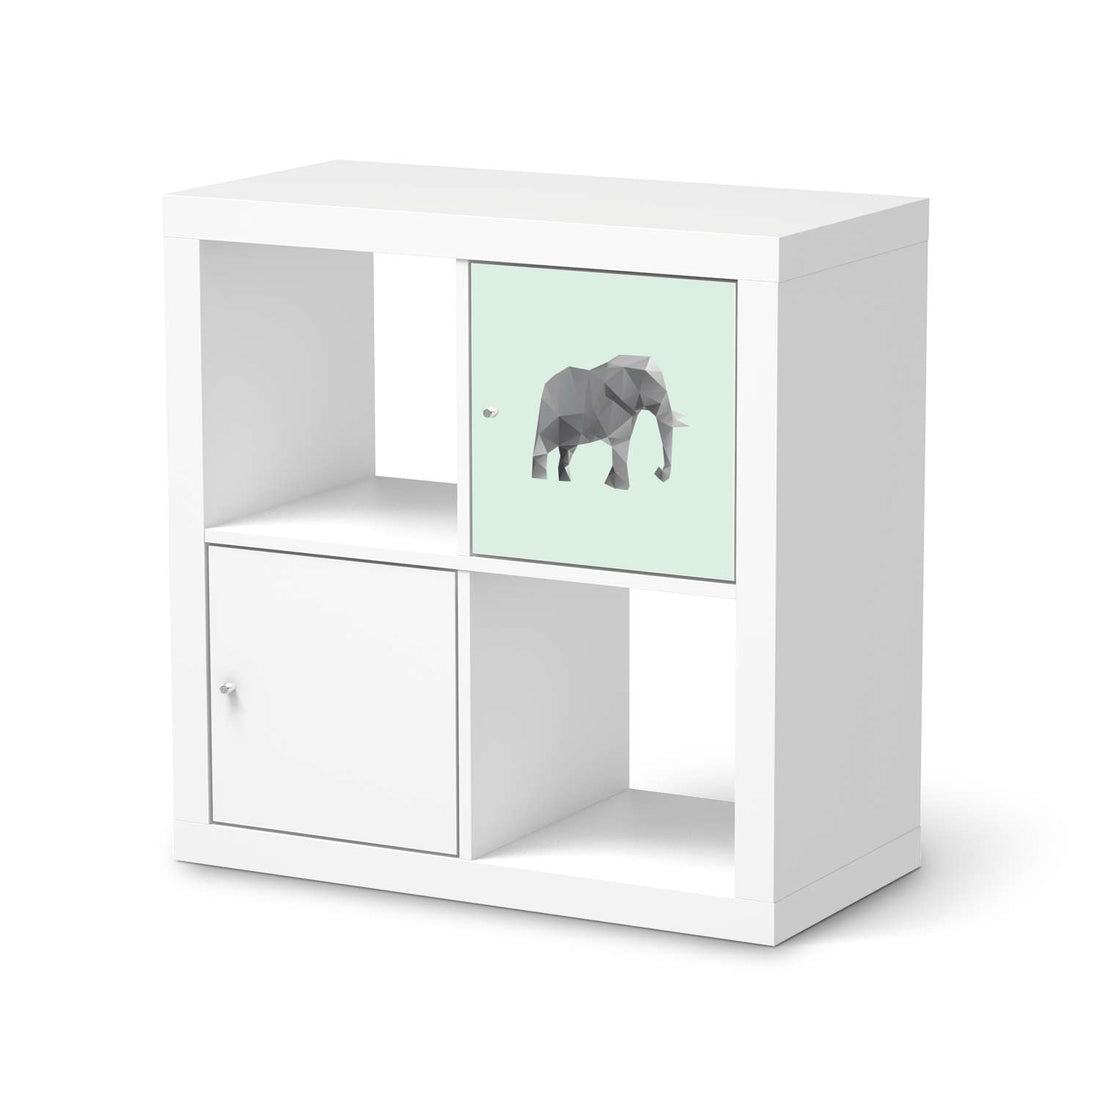 Selbstklebende Folie Origami Elephant - IKEA Kallax Regal 1 Türe  - weiss